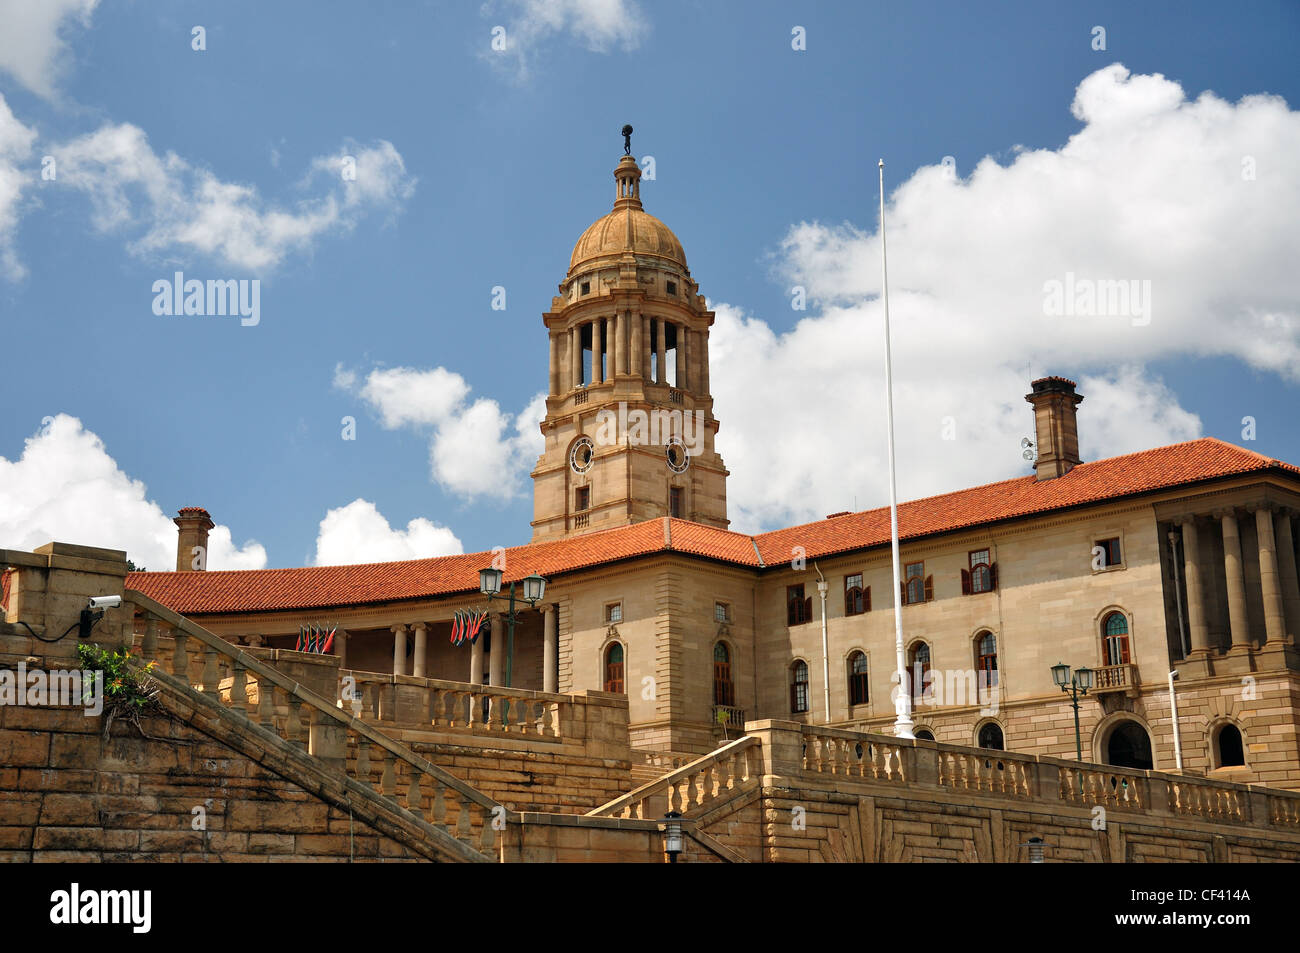 The Union Buildings, Meintjieskop, Pretoria, Gauteng Province, Republic of South Africa Stock Photo